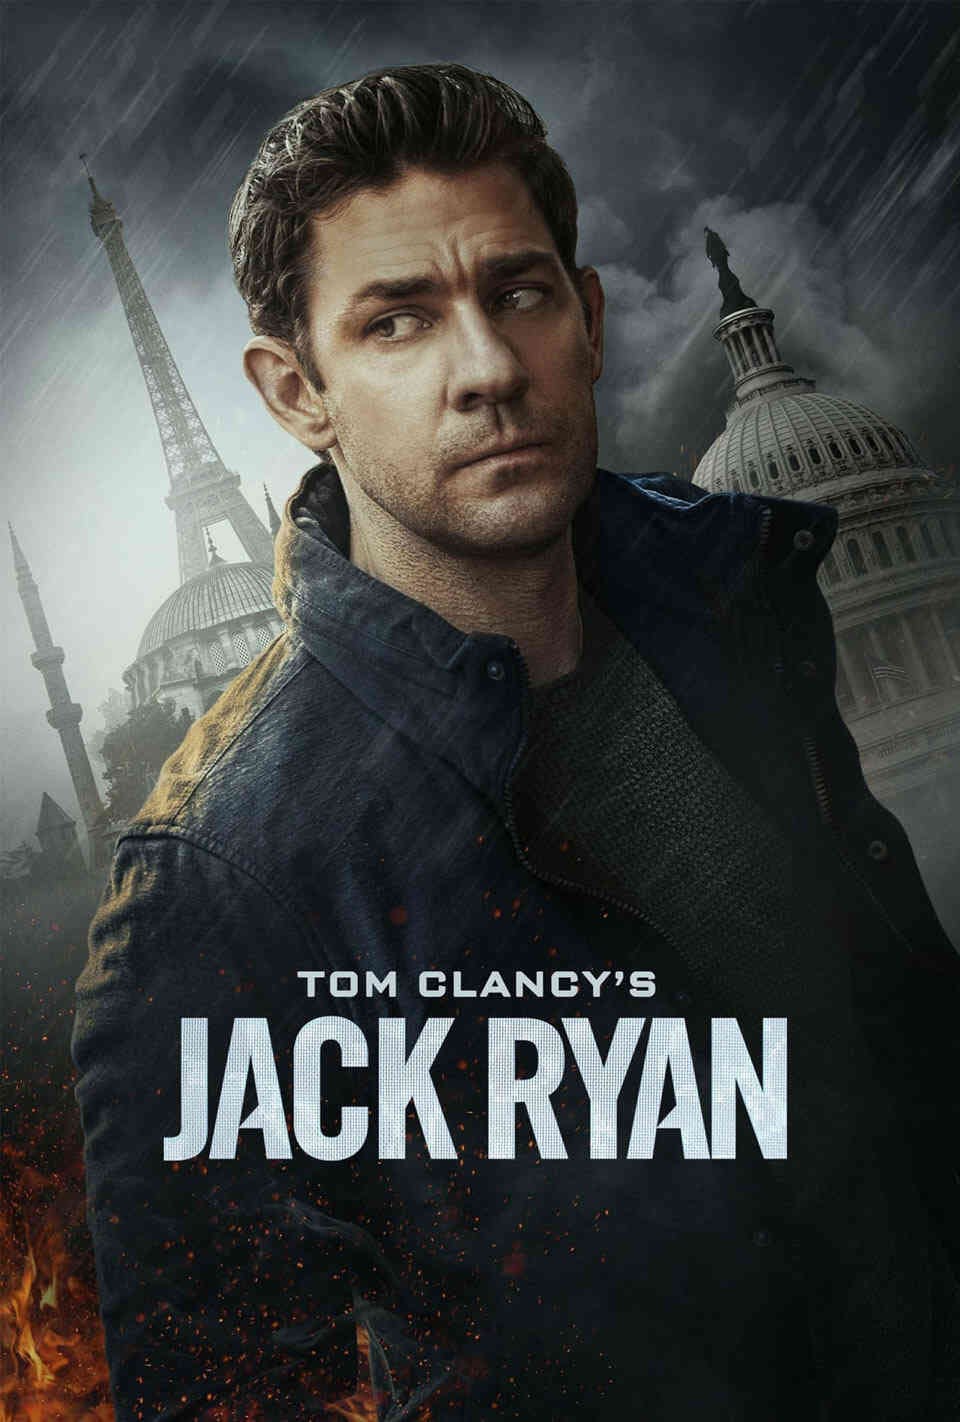 Read Tom Clancy's Jack Ryan screenplay.